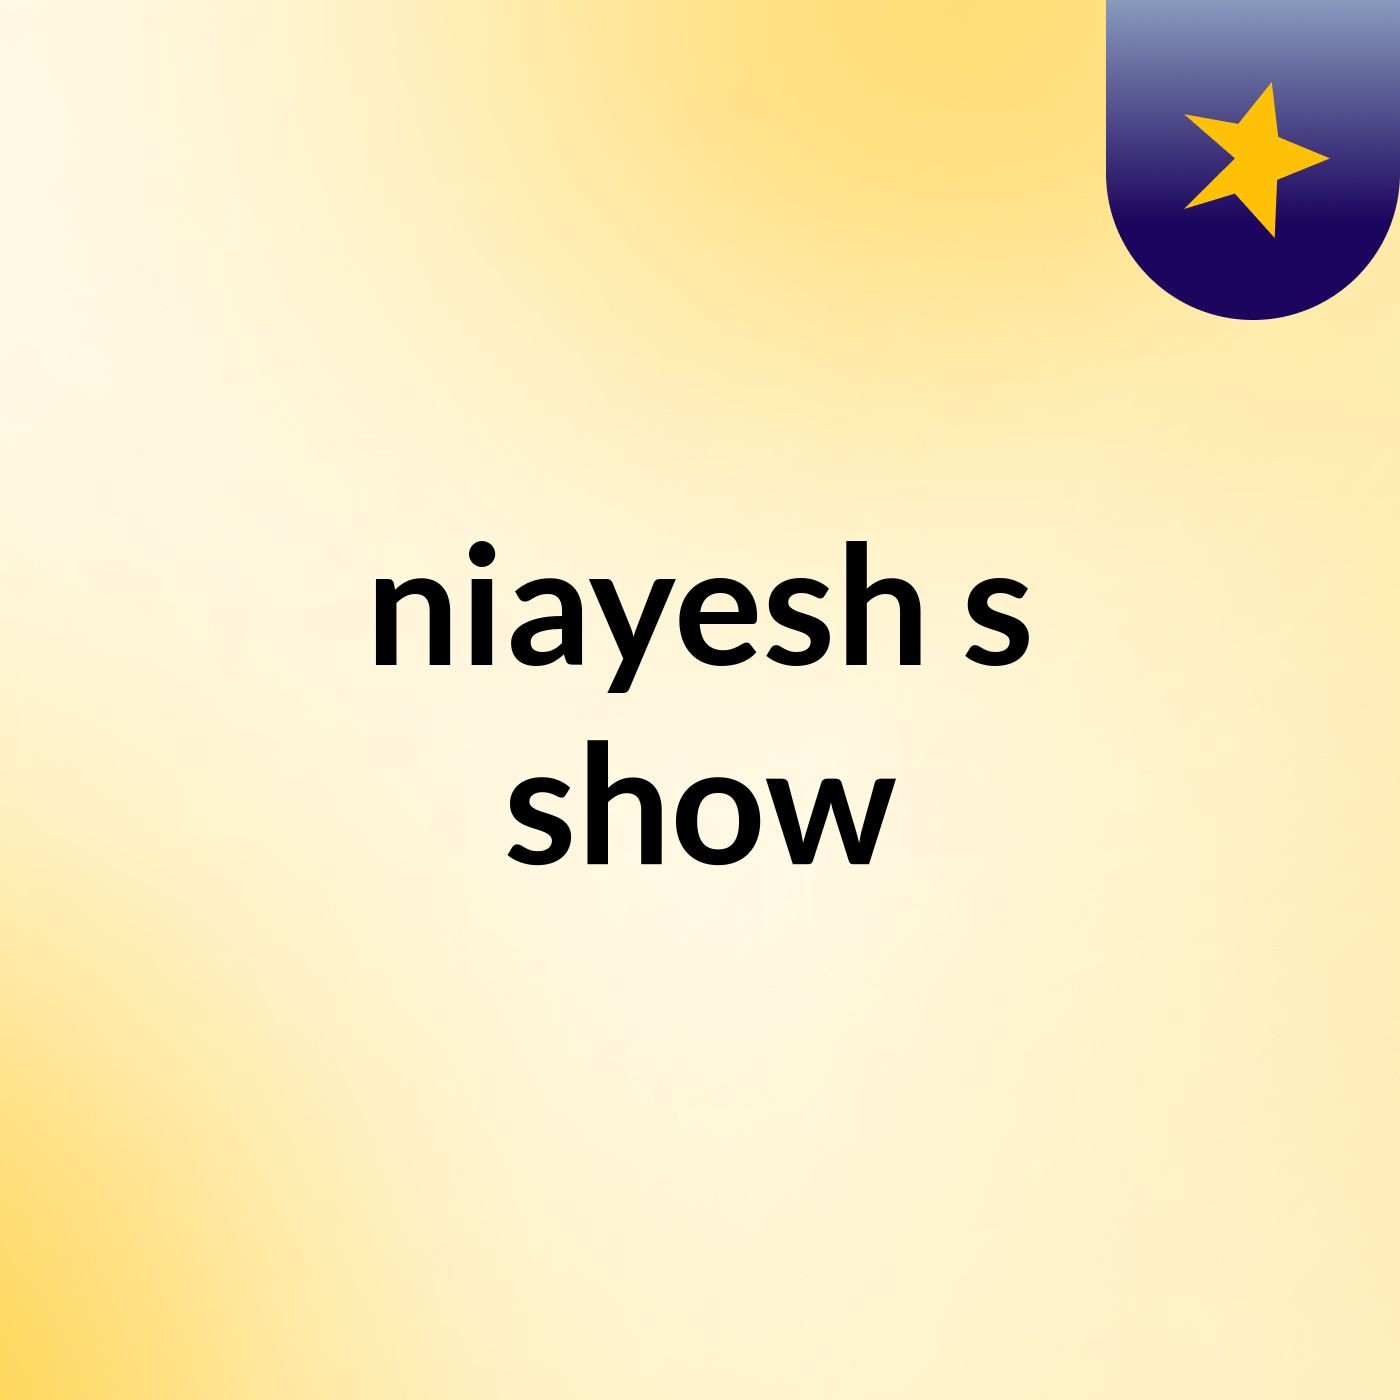 niayesh's show